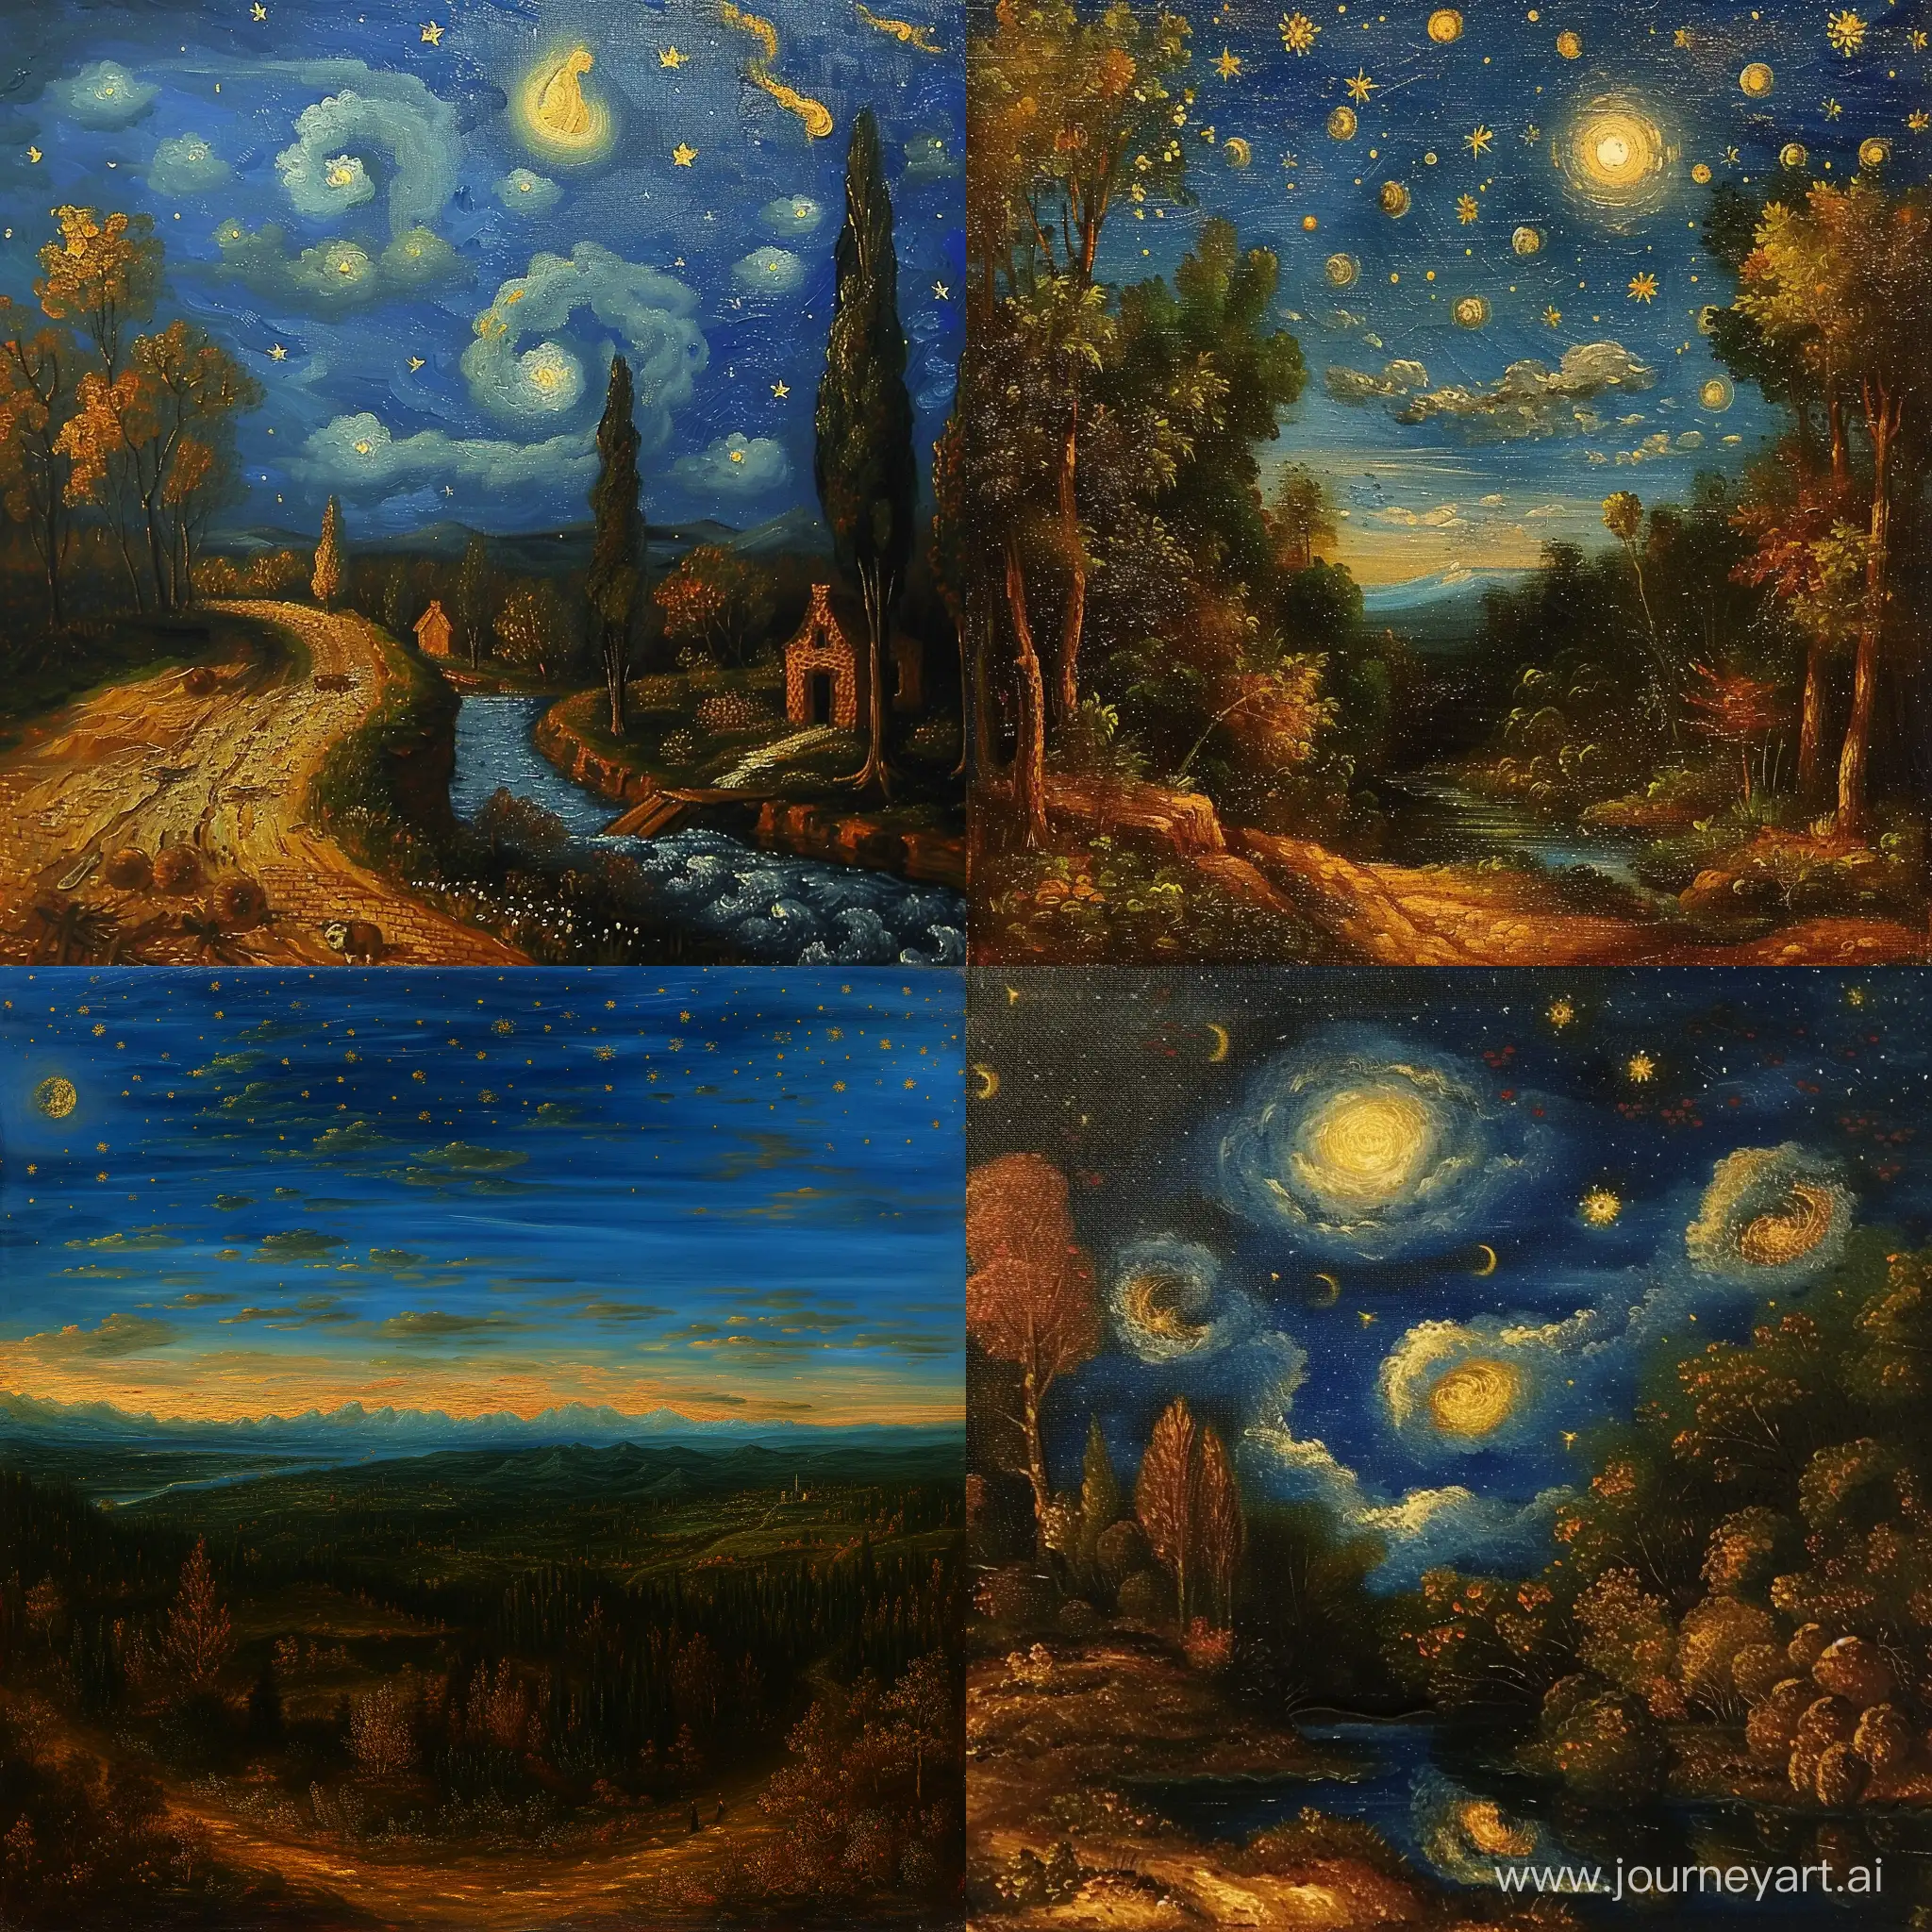 Detailed painting of a landscape --sref https://cdn.discordapp.com/attachments/1187305629551972372/1205241650285387847/41-starry-night-vincent-van-gogh.jpg?ex=65d7a7c1&is=65c532c1&hm=c091fc07b7b4235e13c88bde5b2245cd9d5fec78f54ef2ac8eefcd99dff99aa1& ::2 https://cdn.discordapp.com/attachments/1187305629551972372/1205241650750947338/1209-1691-Michelangelo-Pacetti-Italian-Landsca.jpg?ex=65d7a7c1&is=65c532c1&hm=99cfb521c0b5b4edbe86c99022f7406d49ce4f23c78384a8957d189845560ccf&